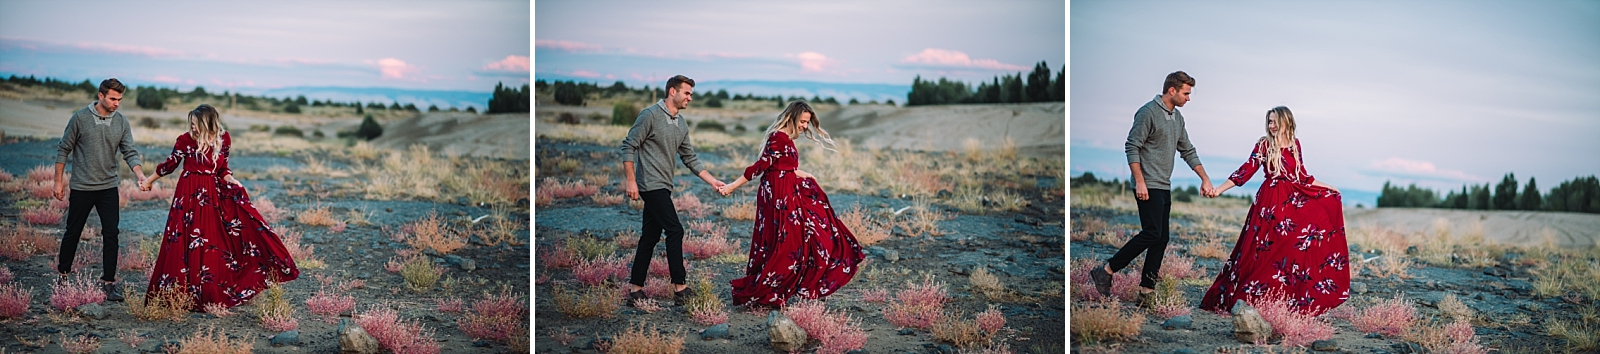 couple walking together engaged dress whimsical romantic fun flirty adventurous